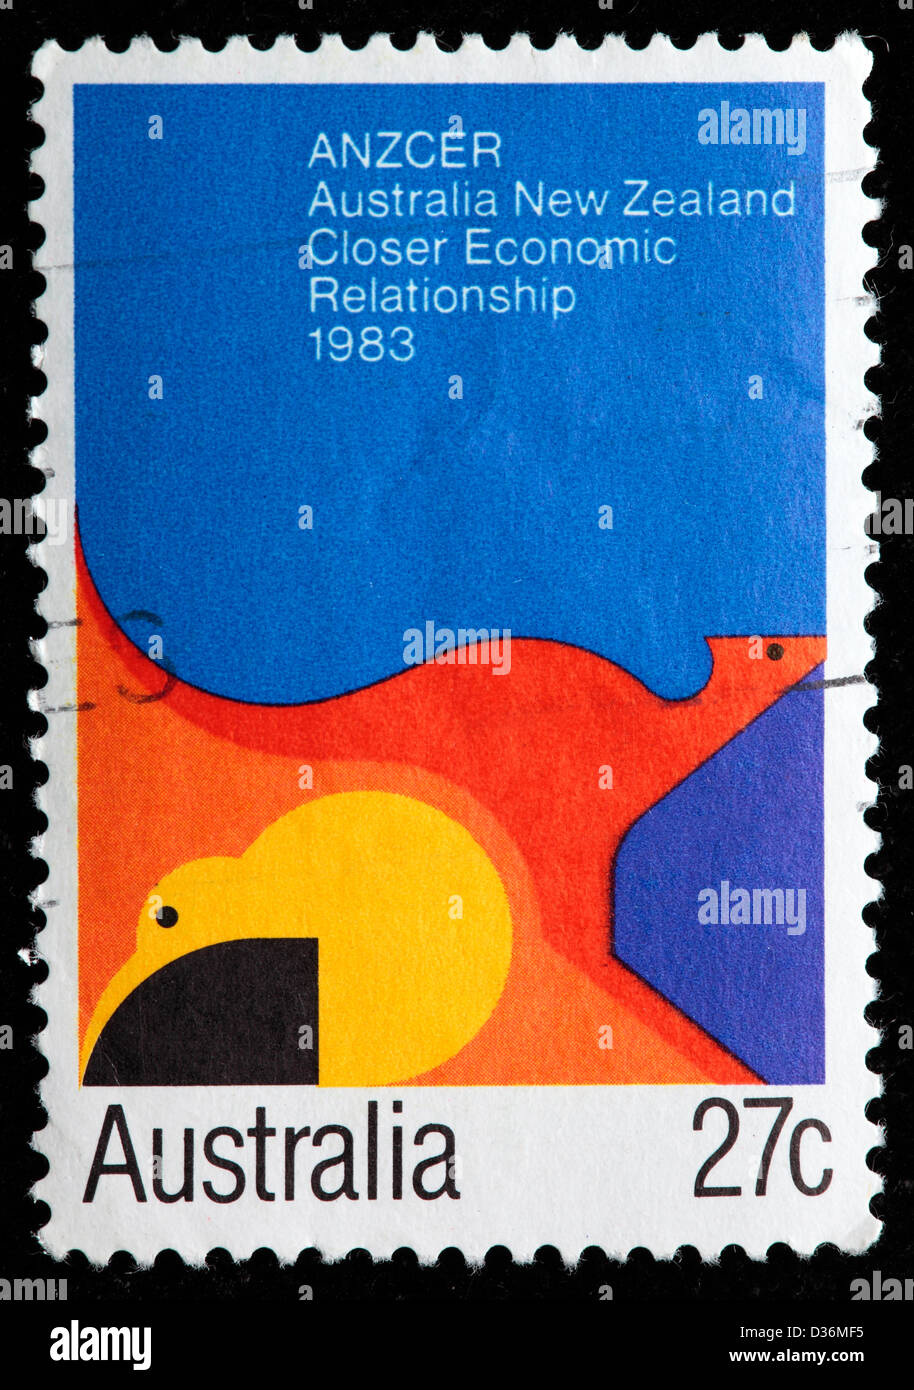 Australia New Zealand Closer Economic Relationship, postage stamp, Australia, 1983 Stock Photo